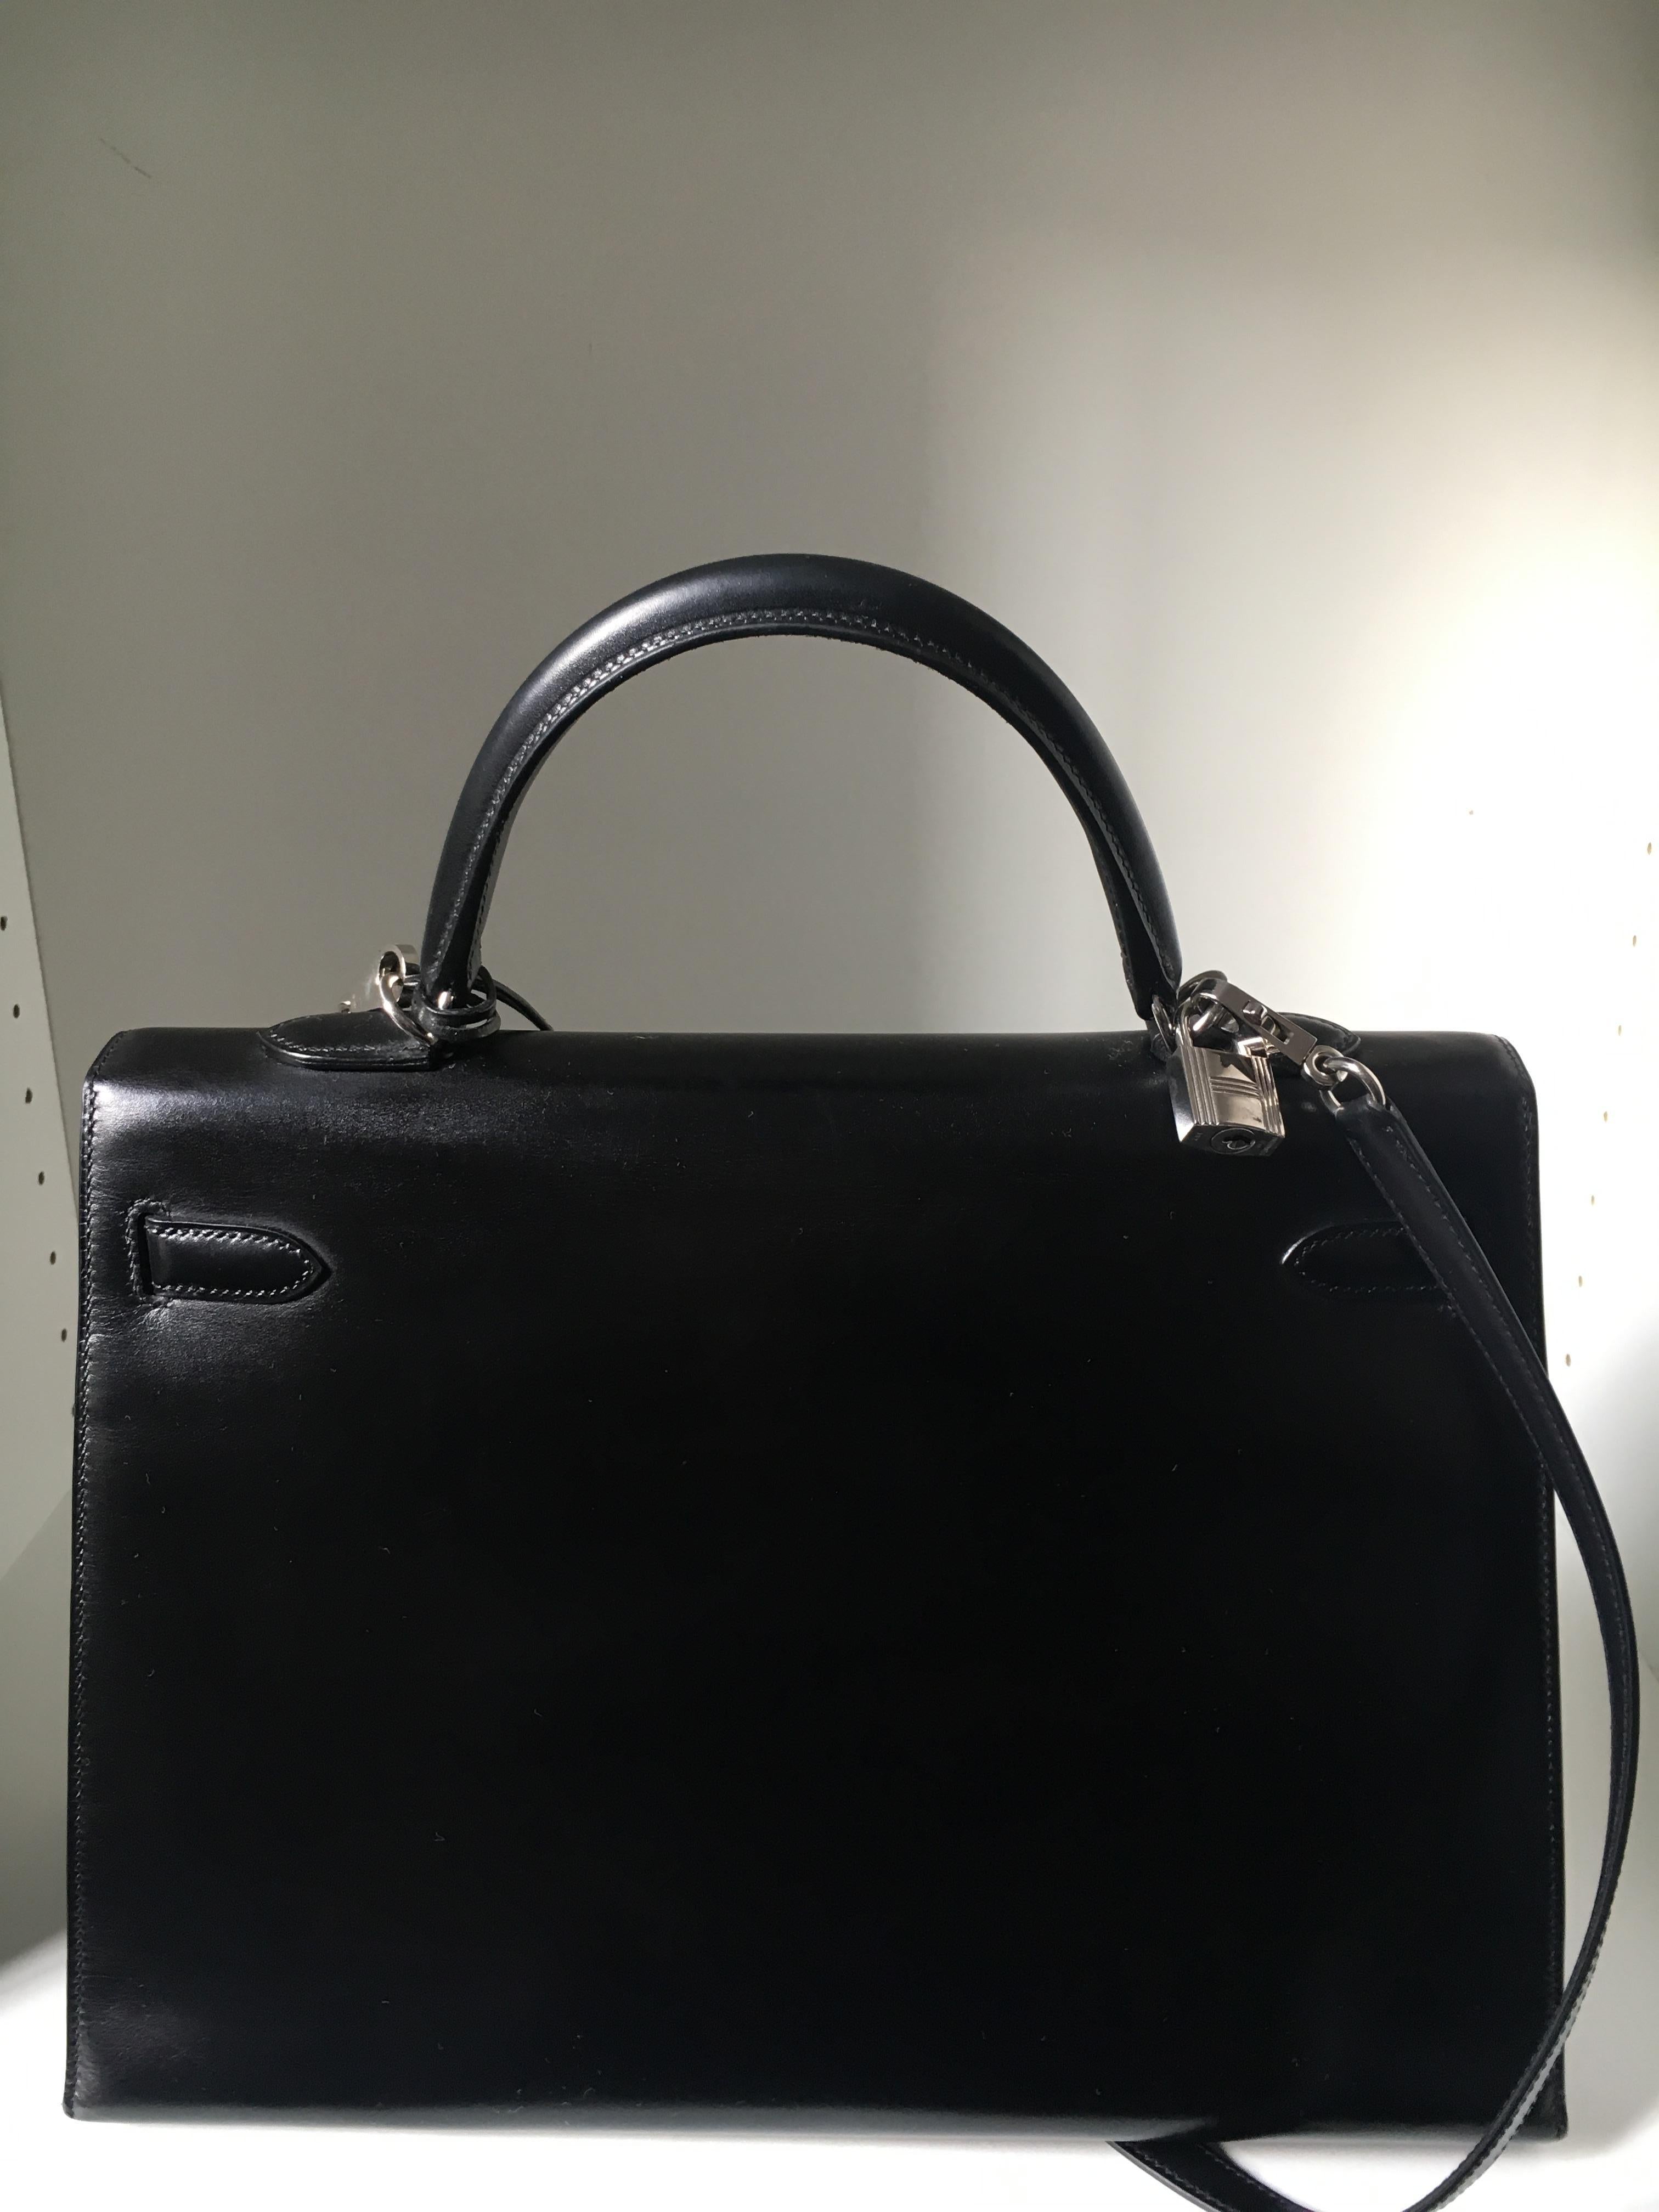 Rare and collector kelly 35 in black box palladium and guilloche hardware.


Superb handbag 